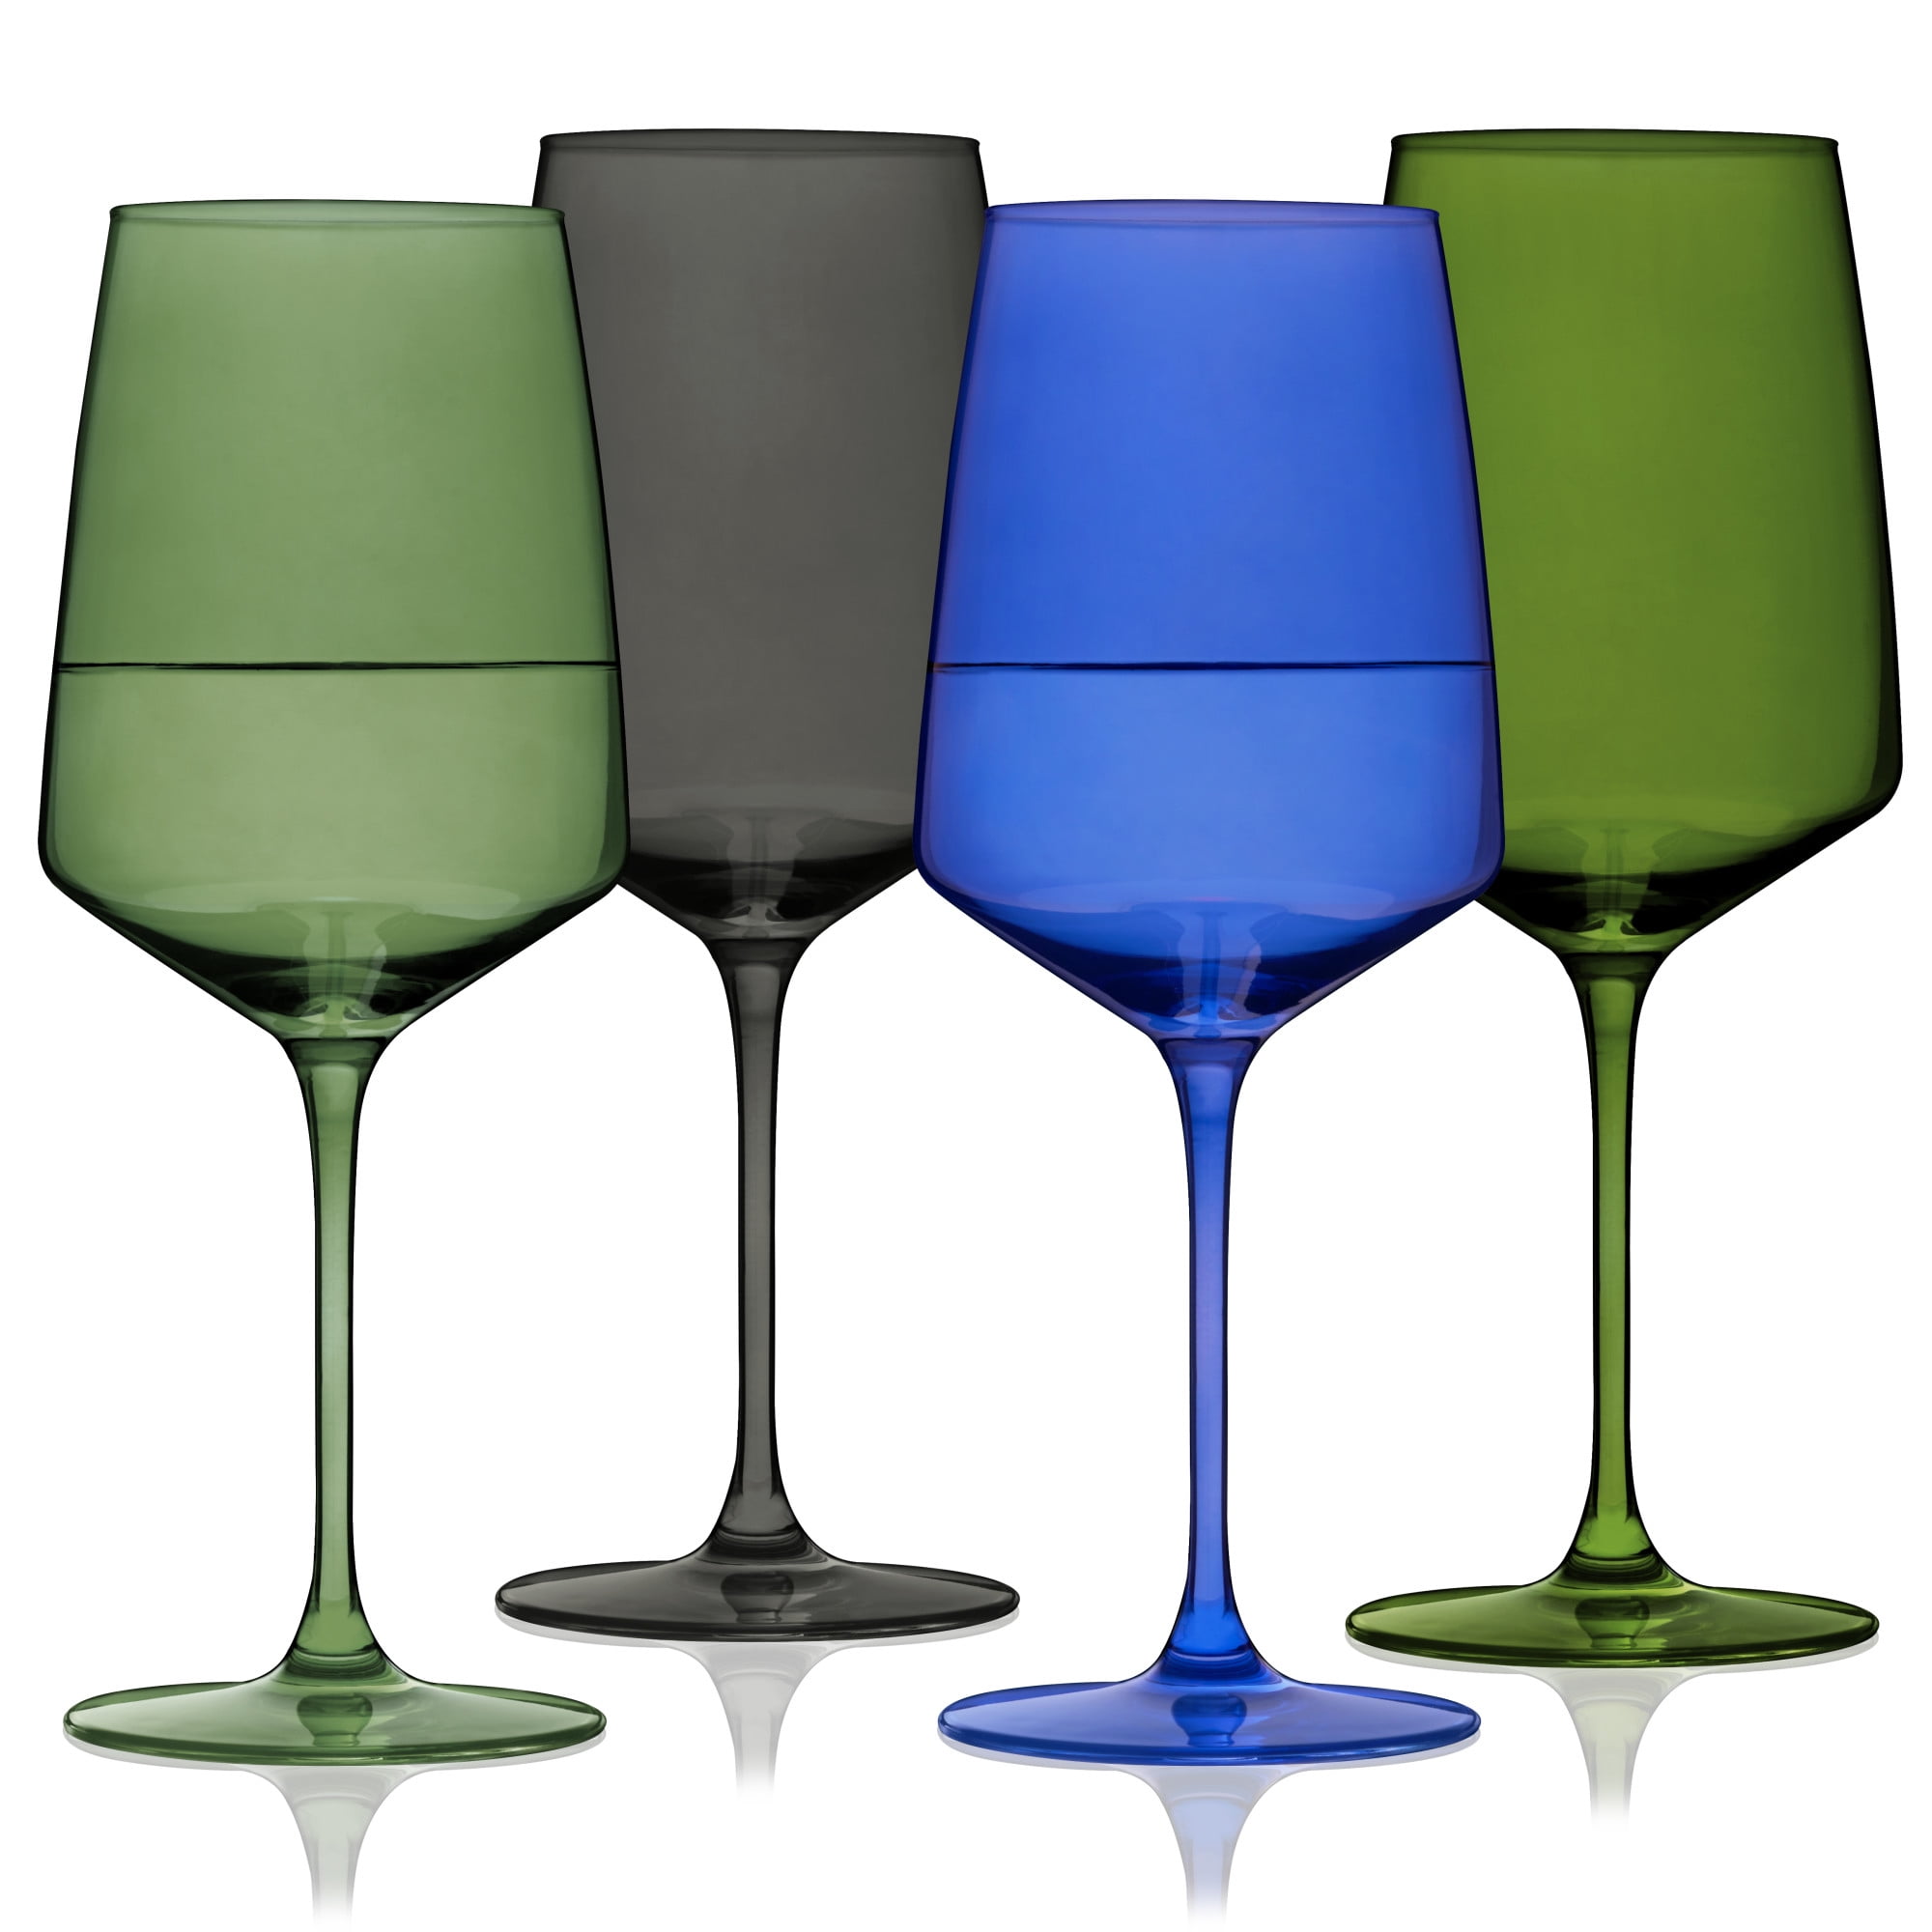 5 OZ. GLASS OF WINE — Spirits of Norway Vineyard